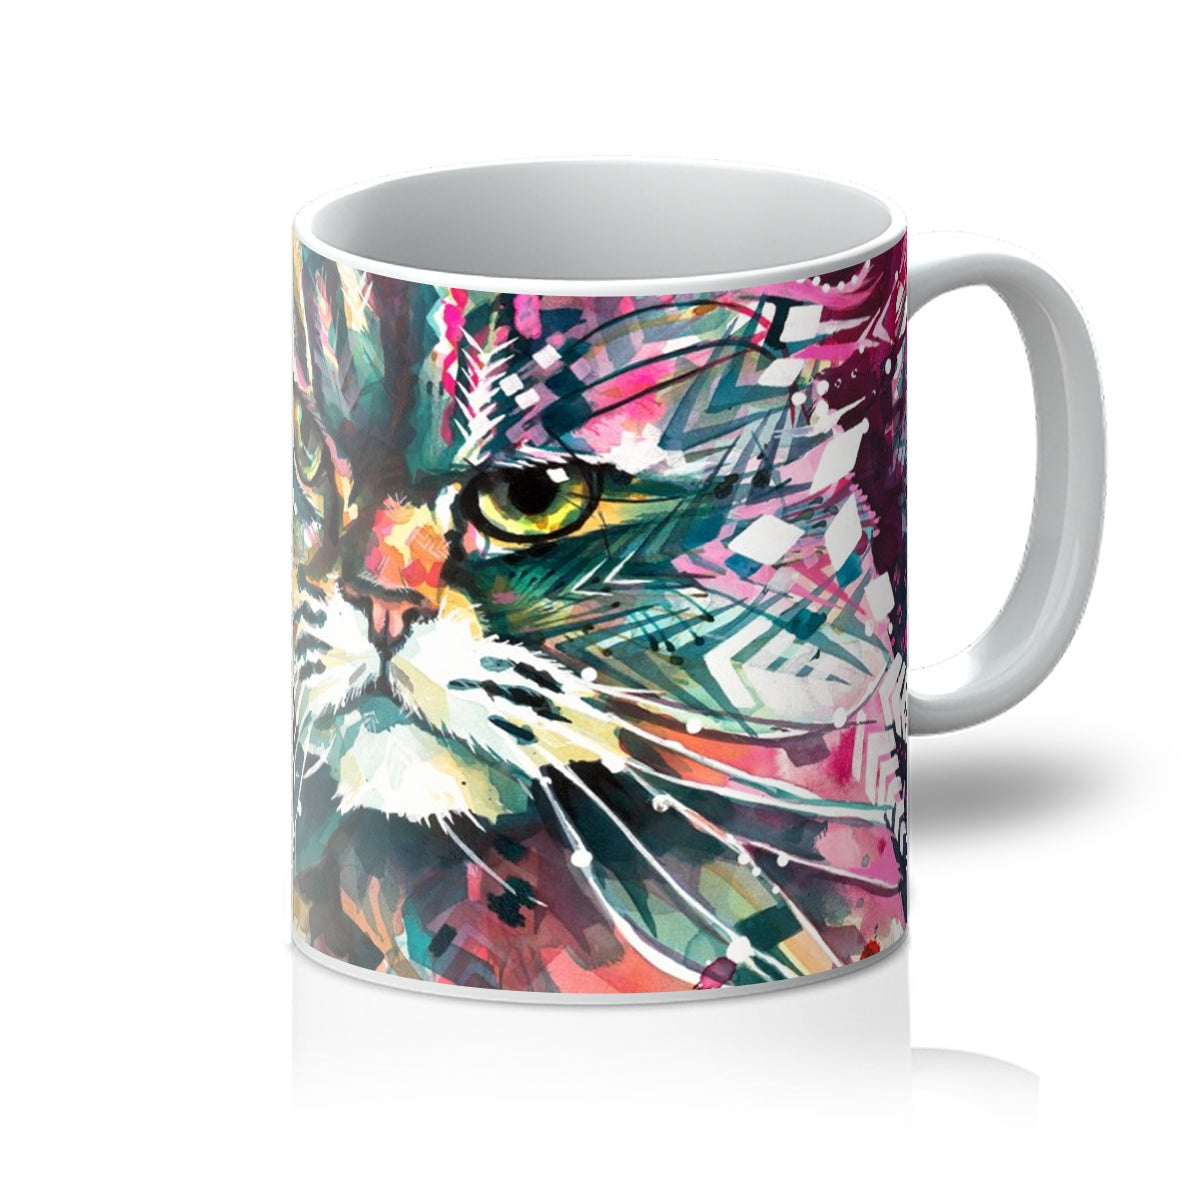 Animal On Mugs | Animal Mugs | Cat Artwork | Cat Portrait | Cat Painting | Animal Art | Colourful Animal Art | Abstract Art